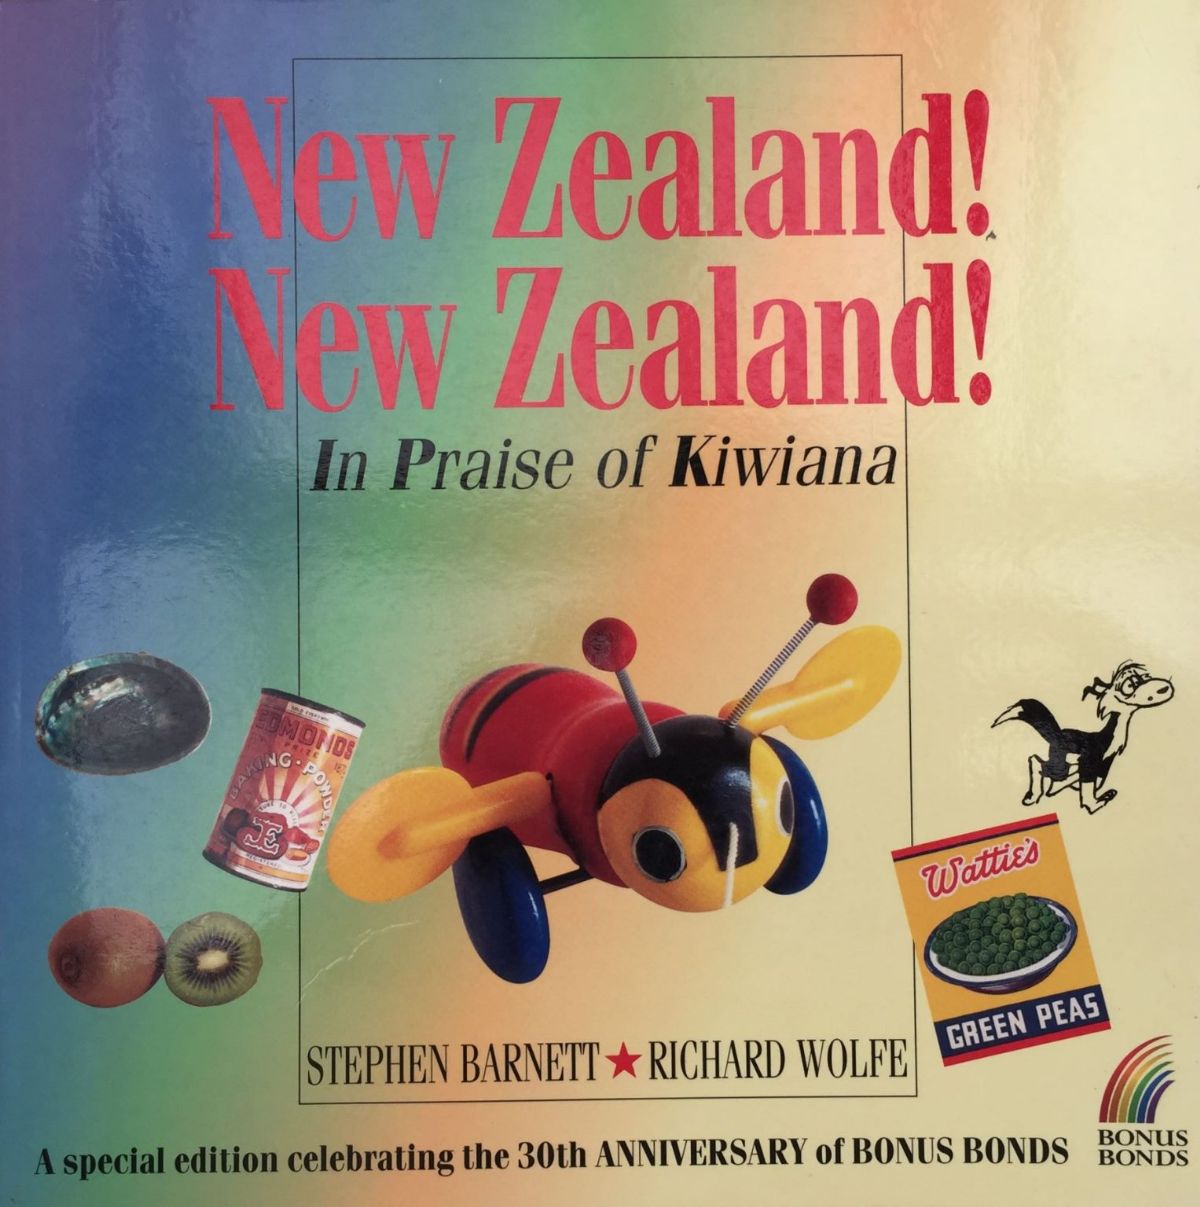 New Zealand! New Zealand! - In Praise of Kiwiana